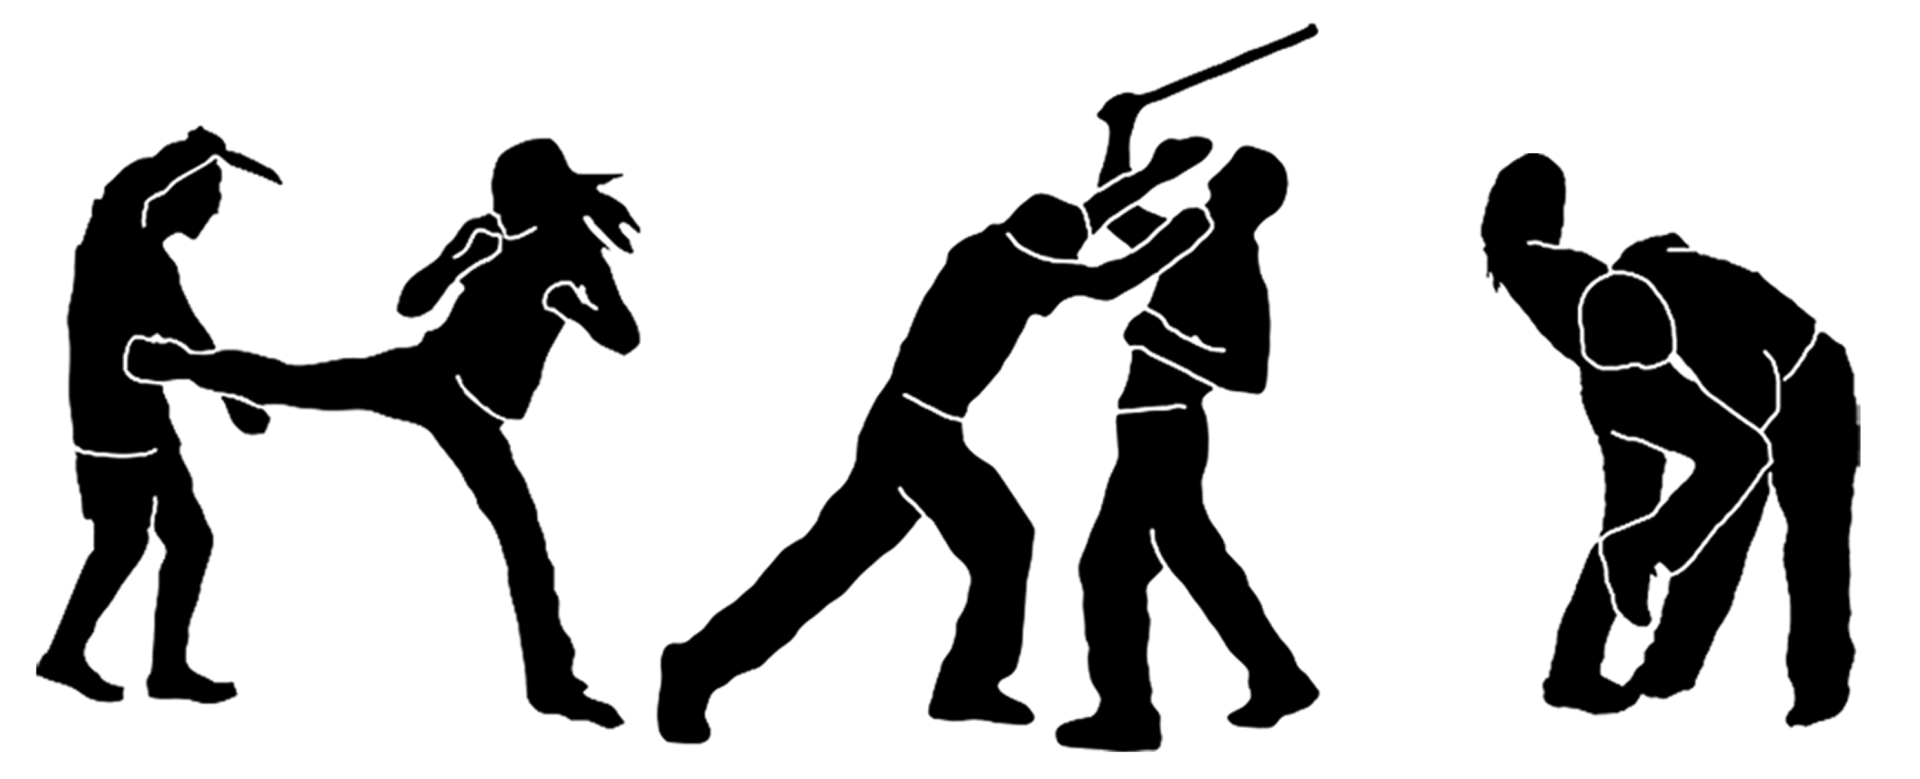 Karate clipart self defense. Mix martial arts dynamic